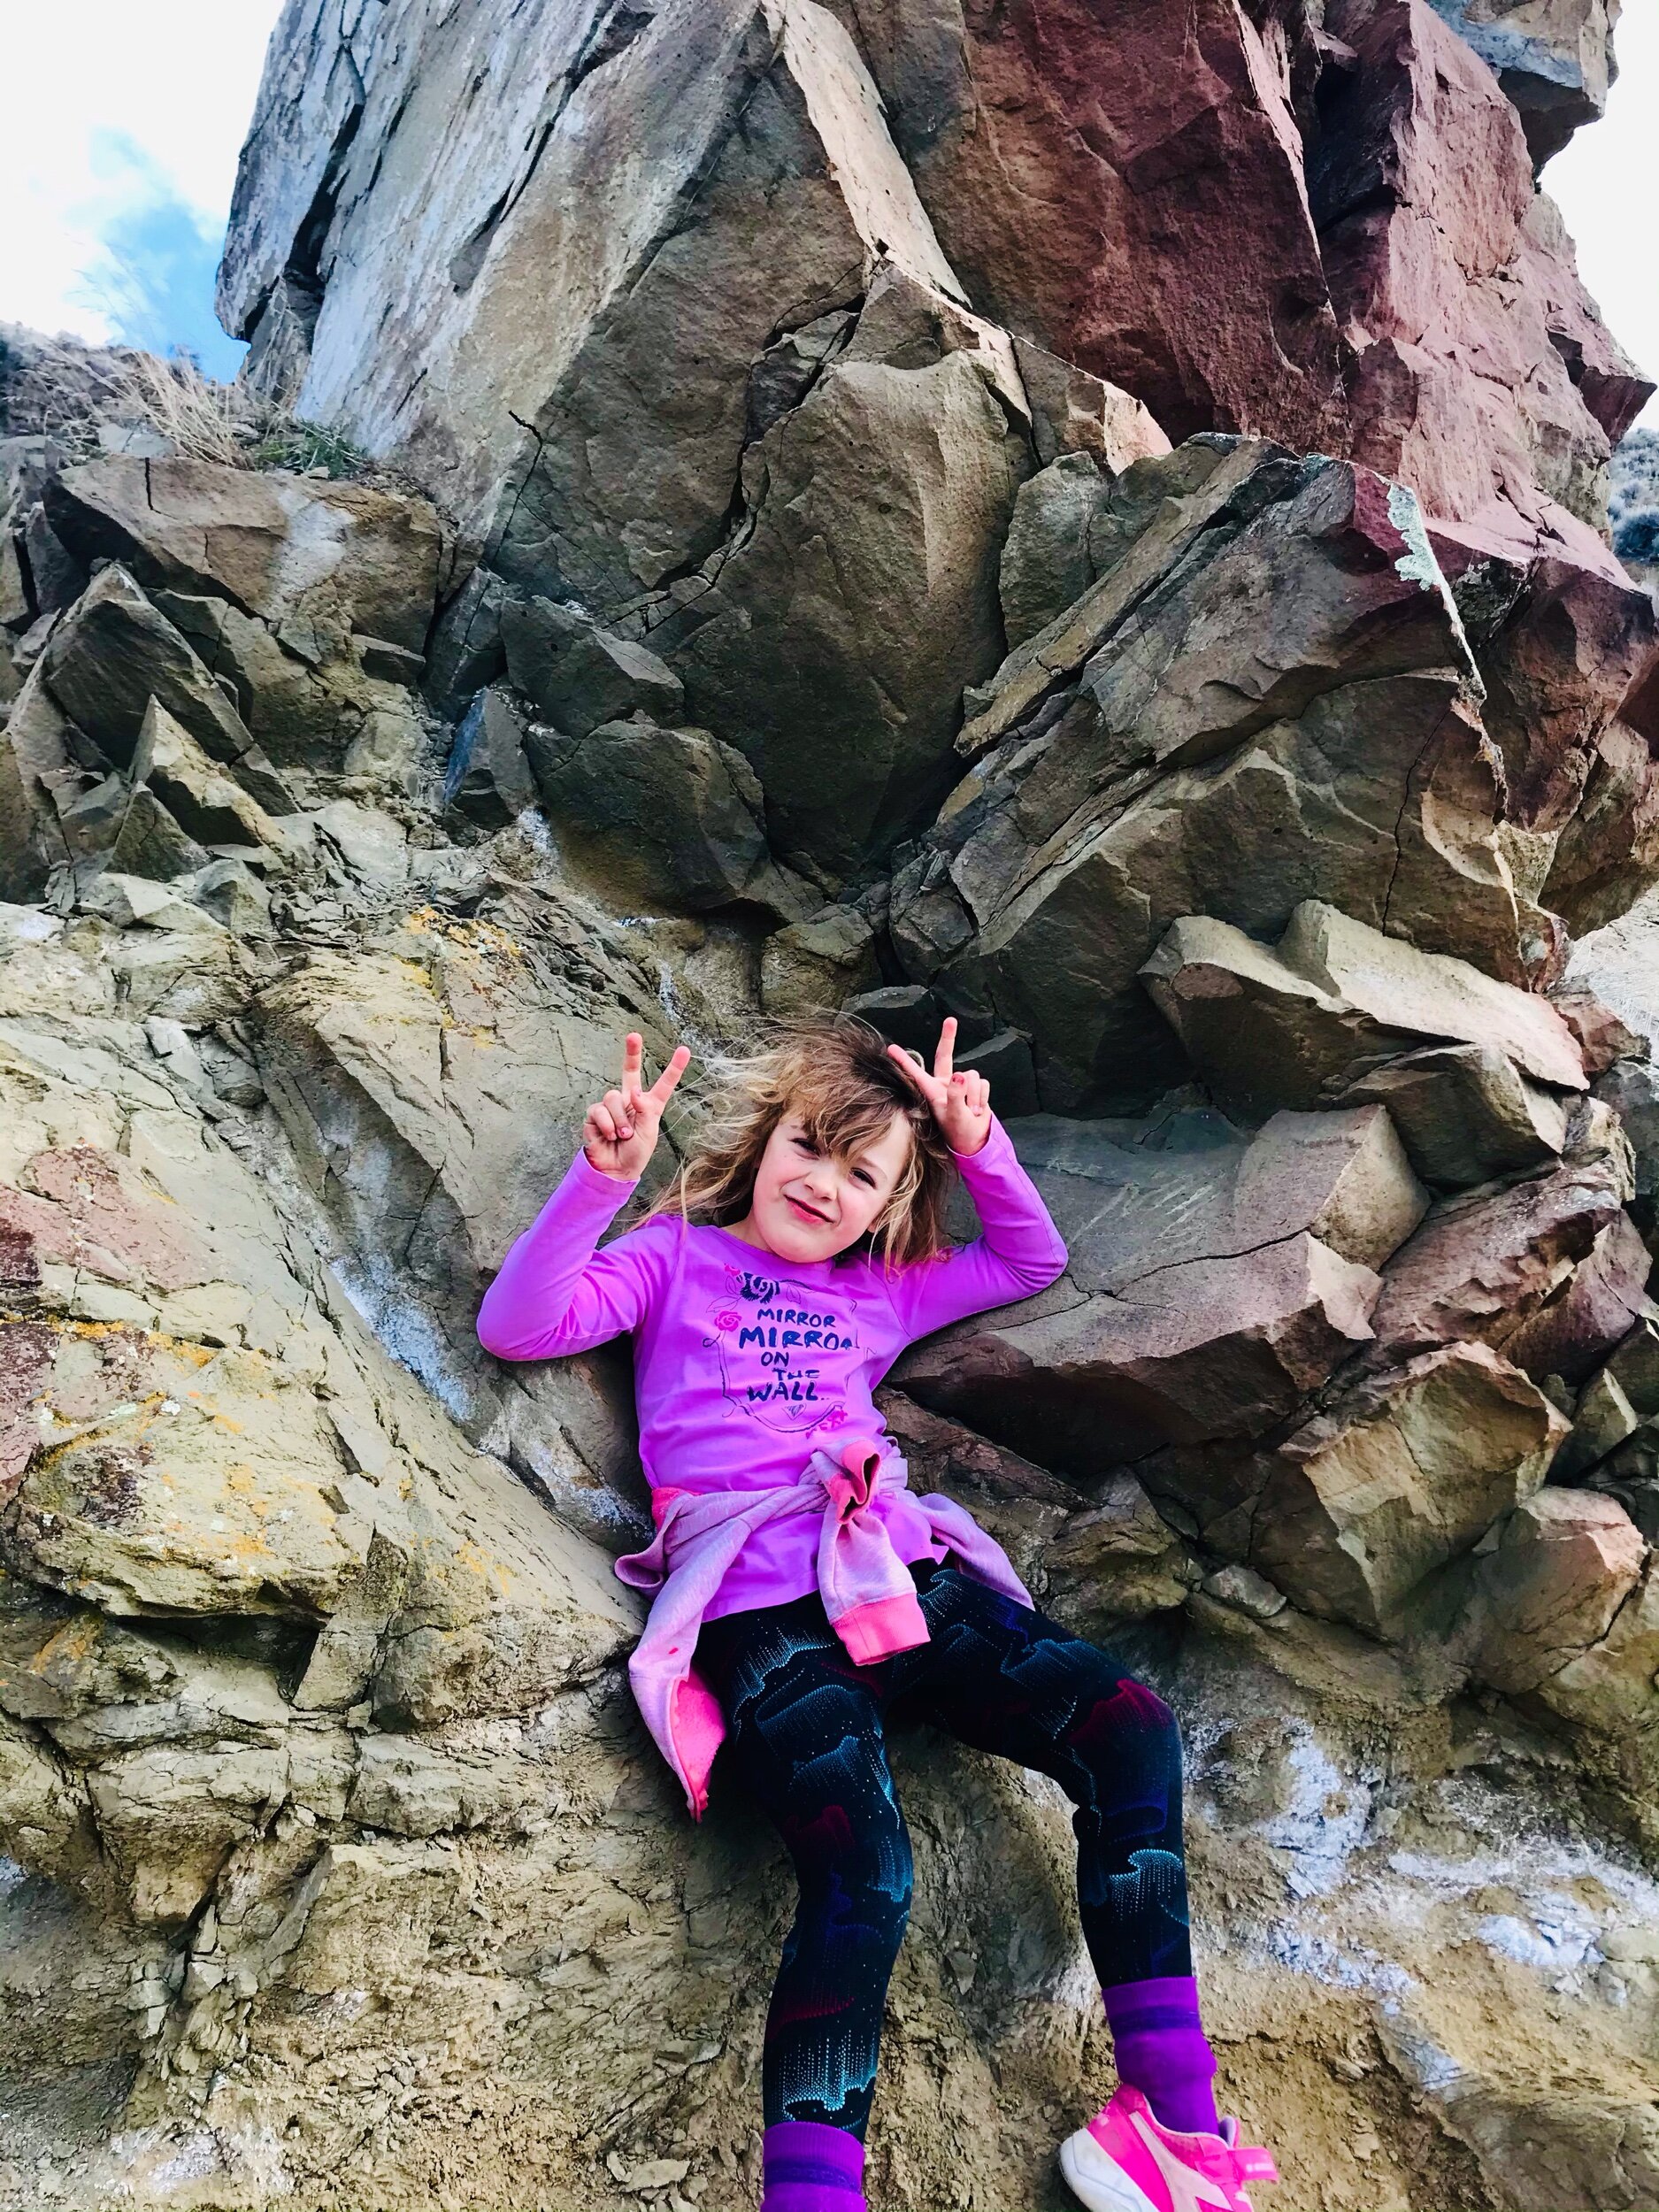 Unique rock formations &amp; little adventure girl!